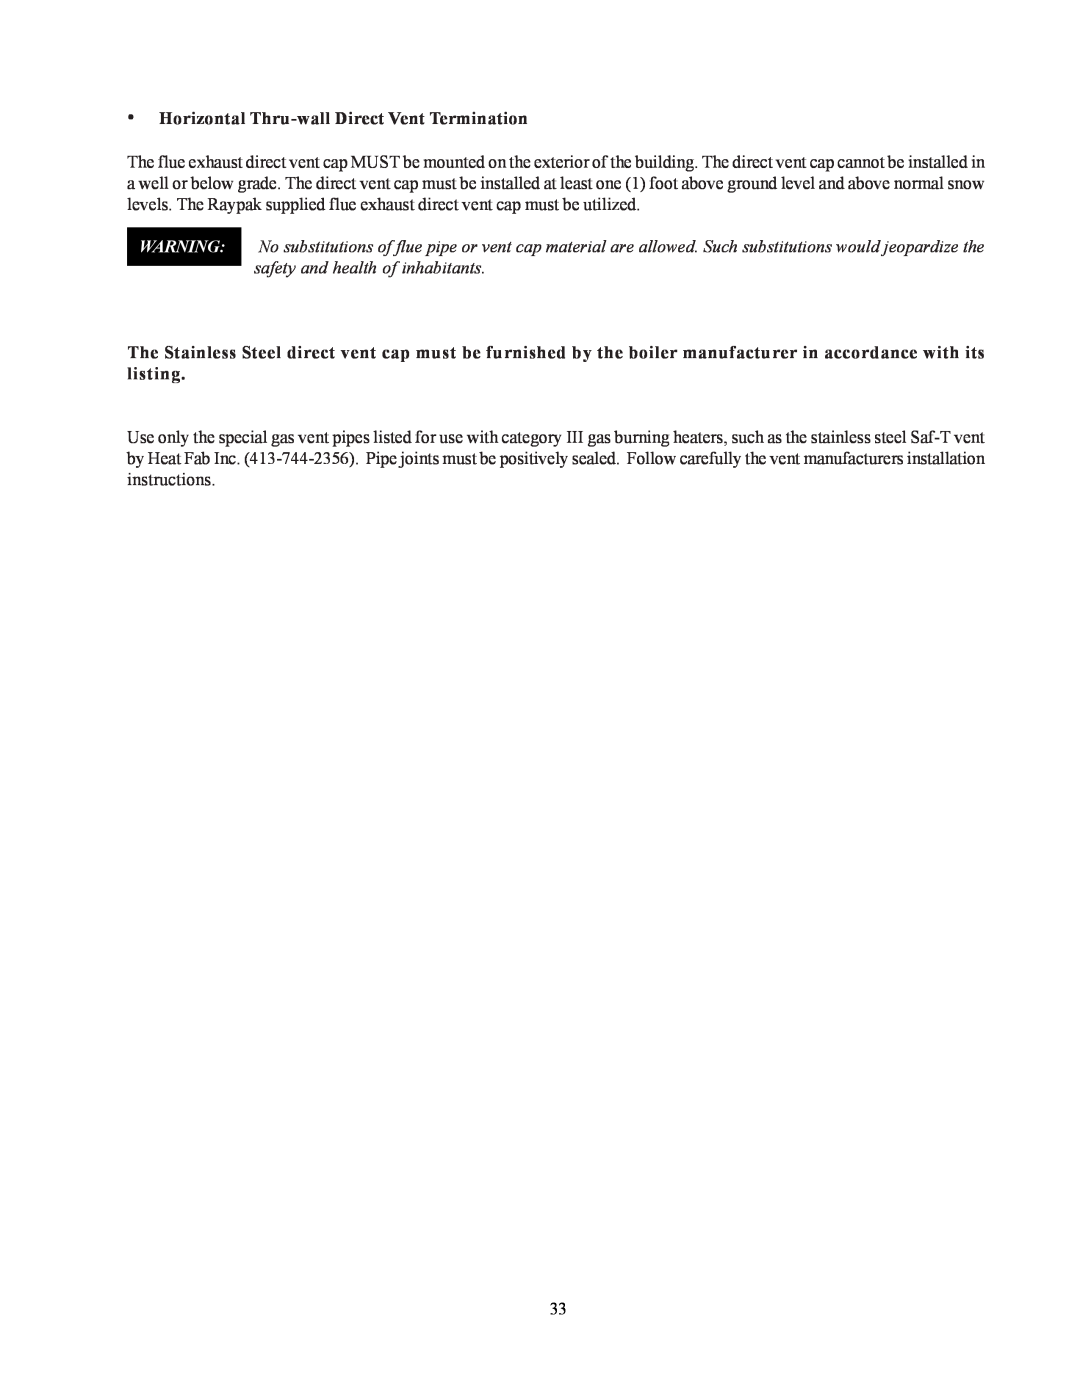 Raypak 302-902 manual Horizontal Thru-wallDirect Vent Termination 